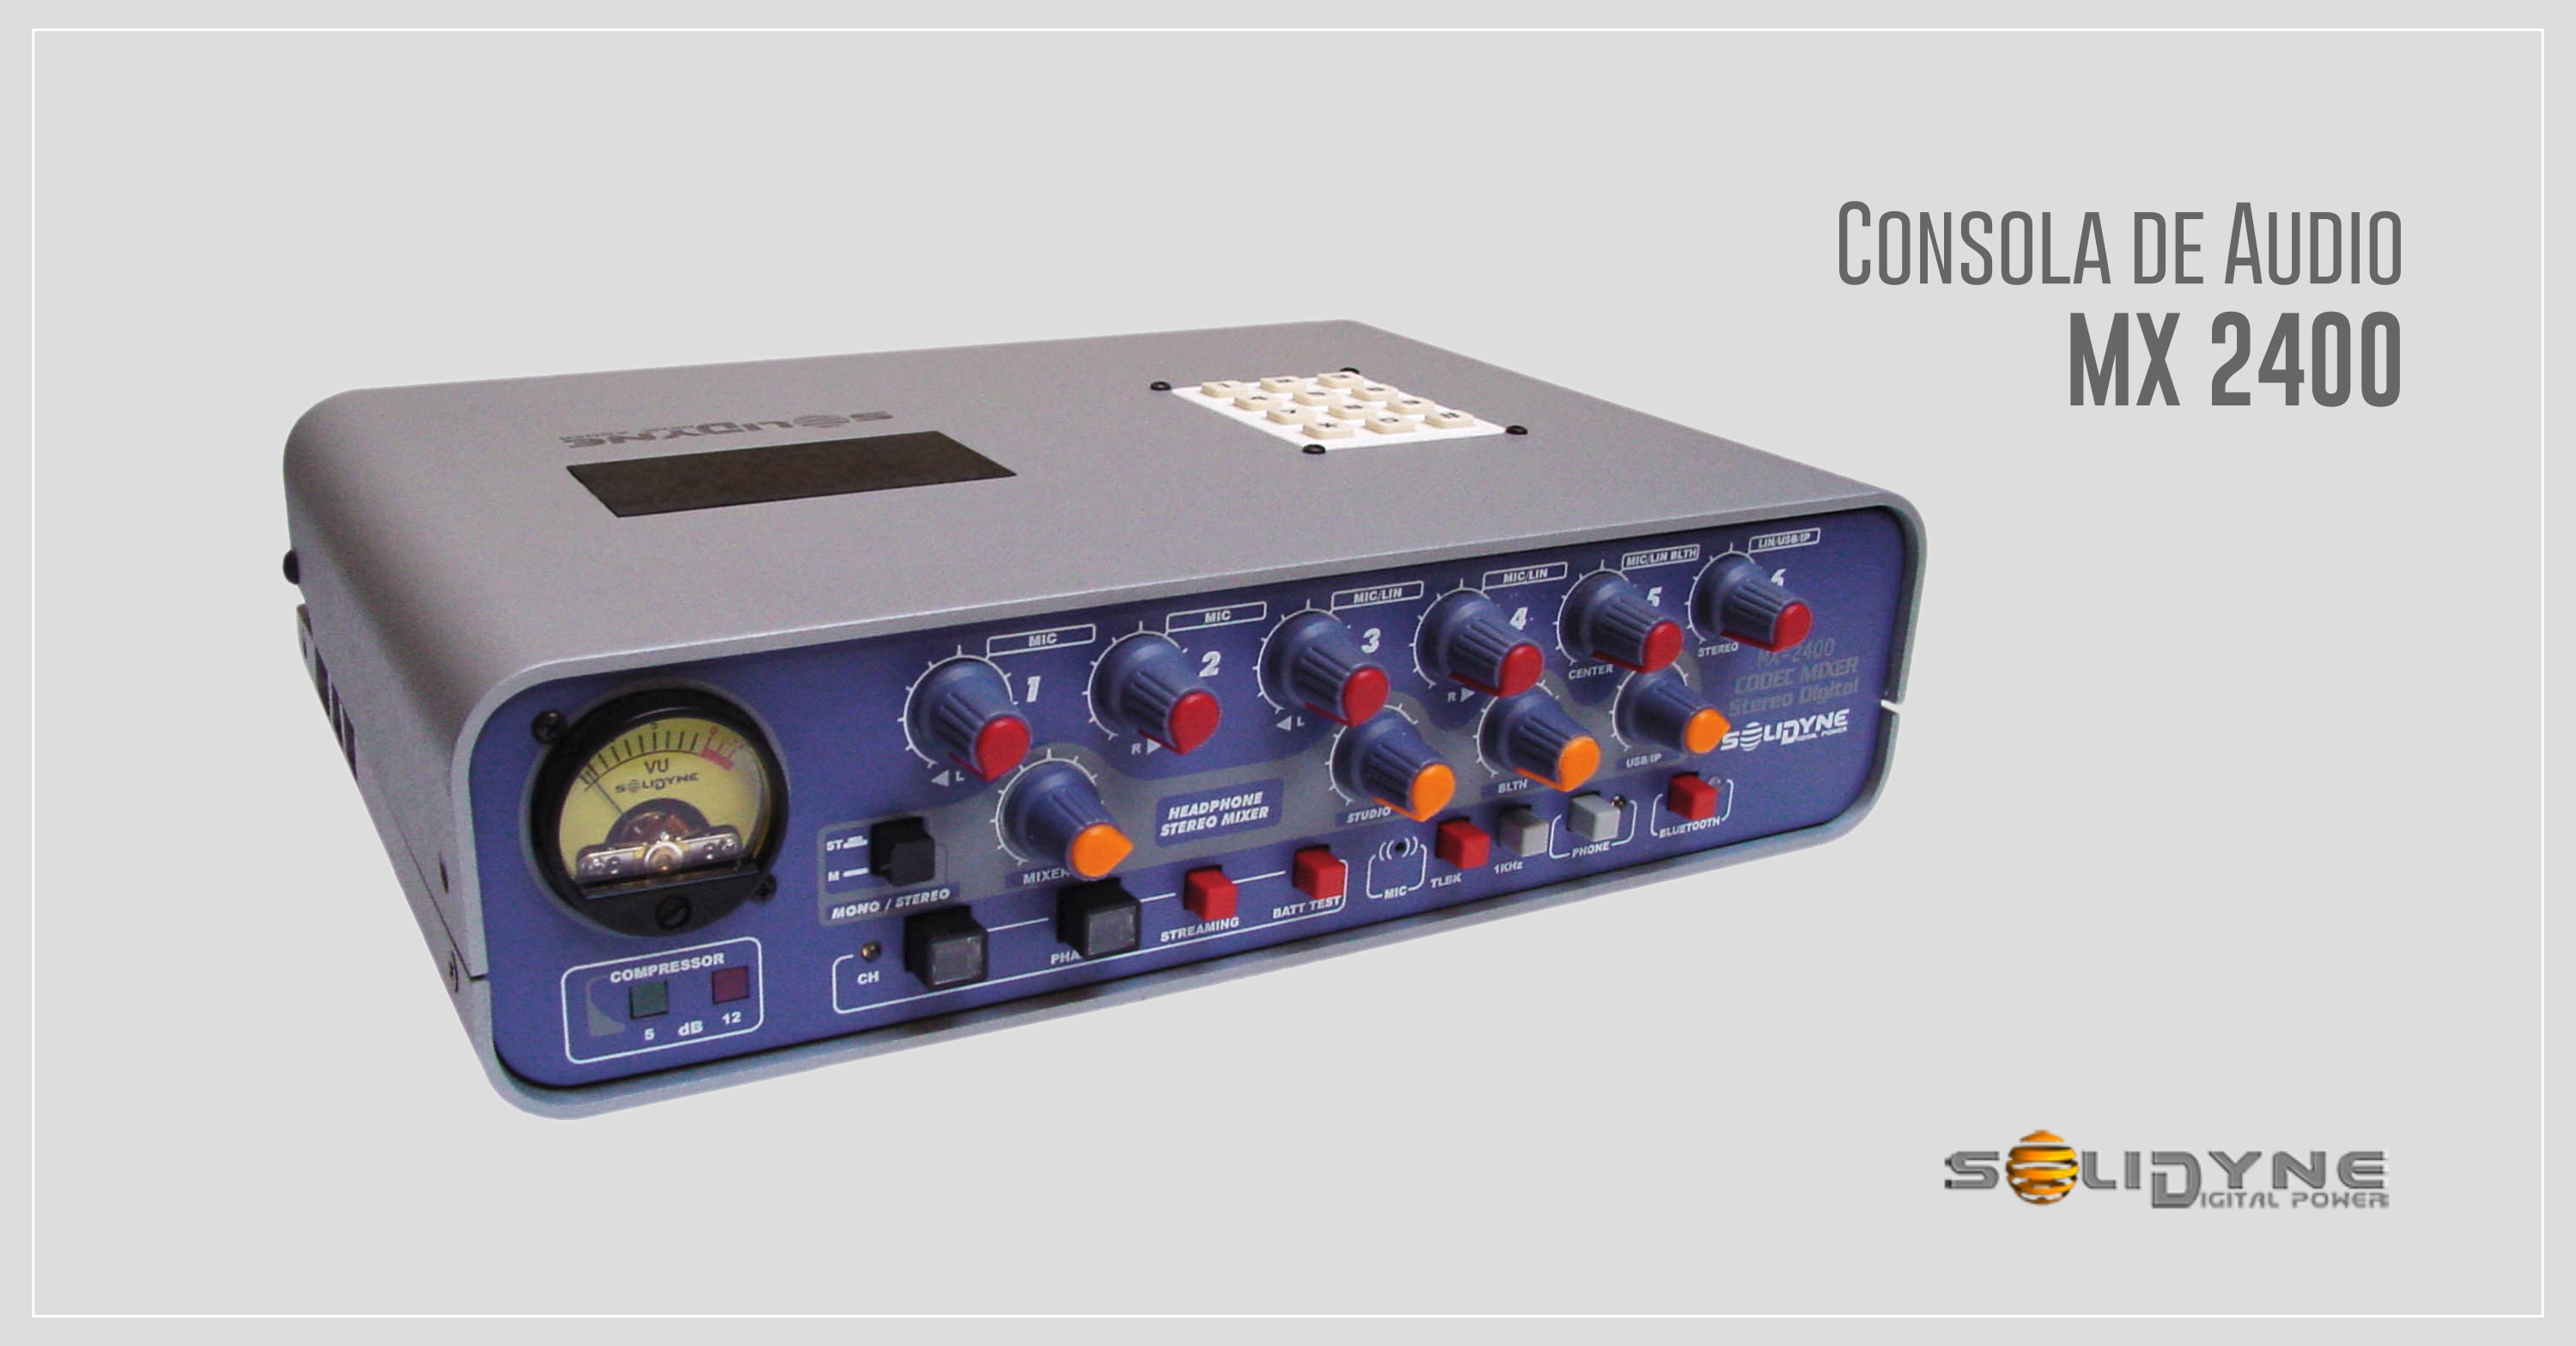 Consola de Audio MX 2400 – Solidyne | Digital Power